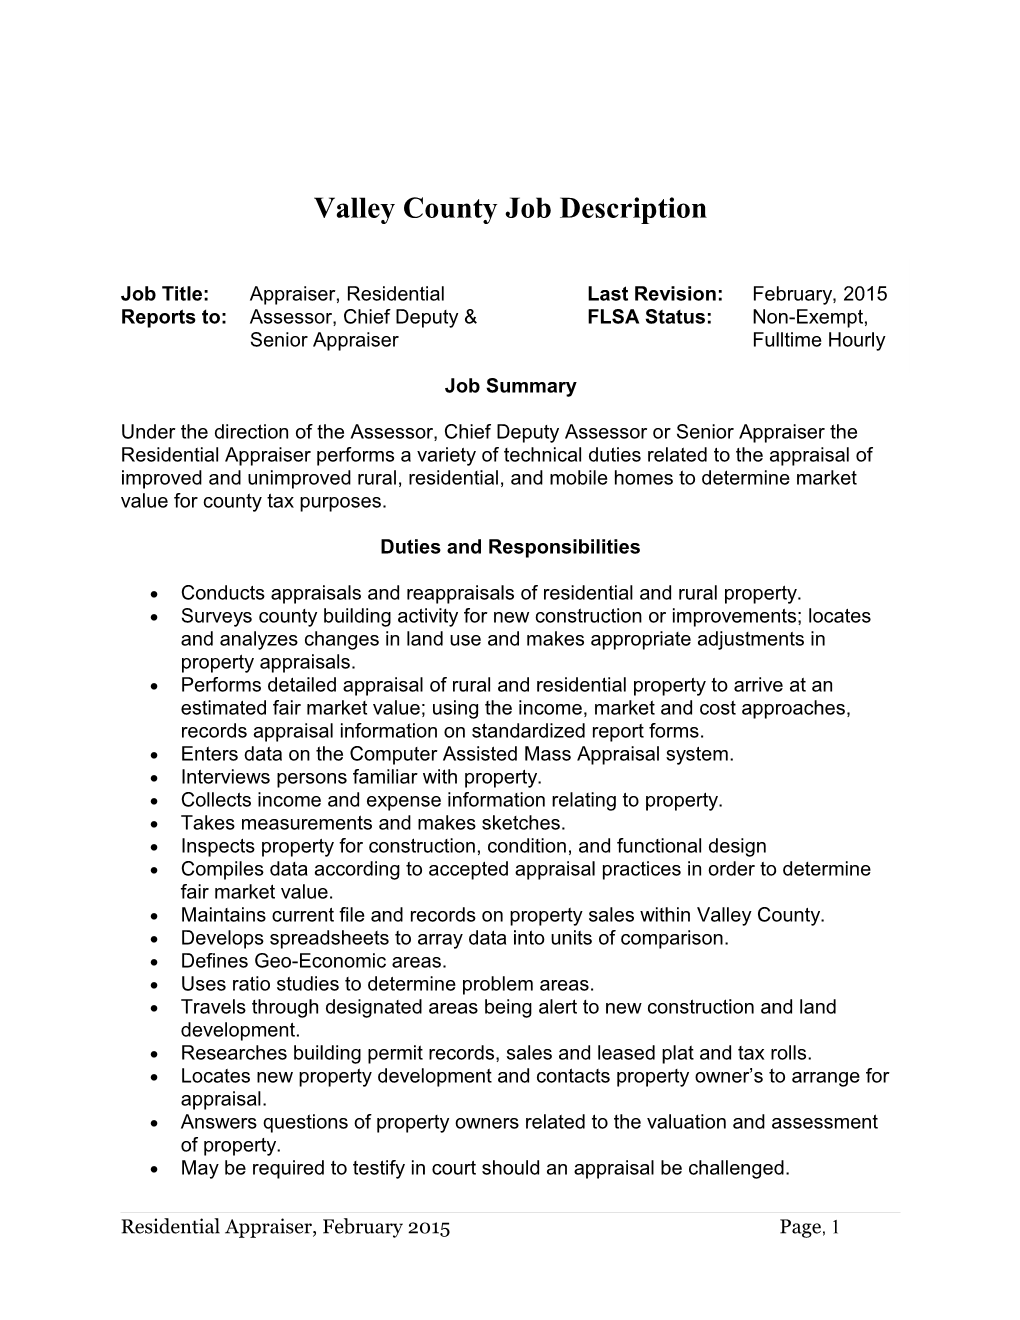 Valley County Job Description